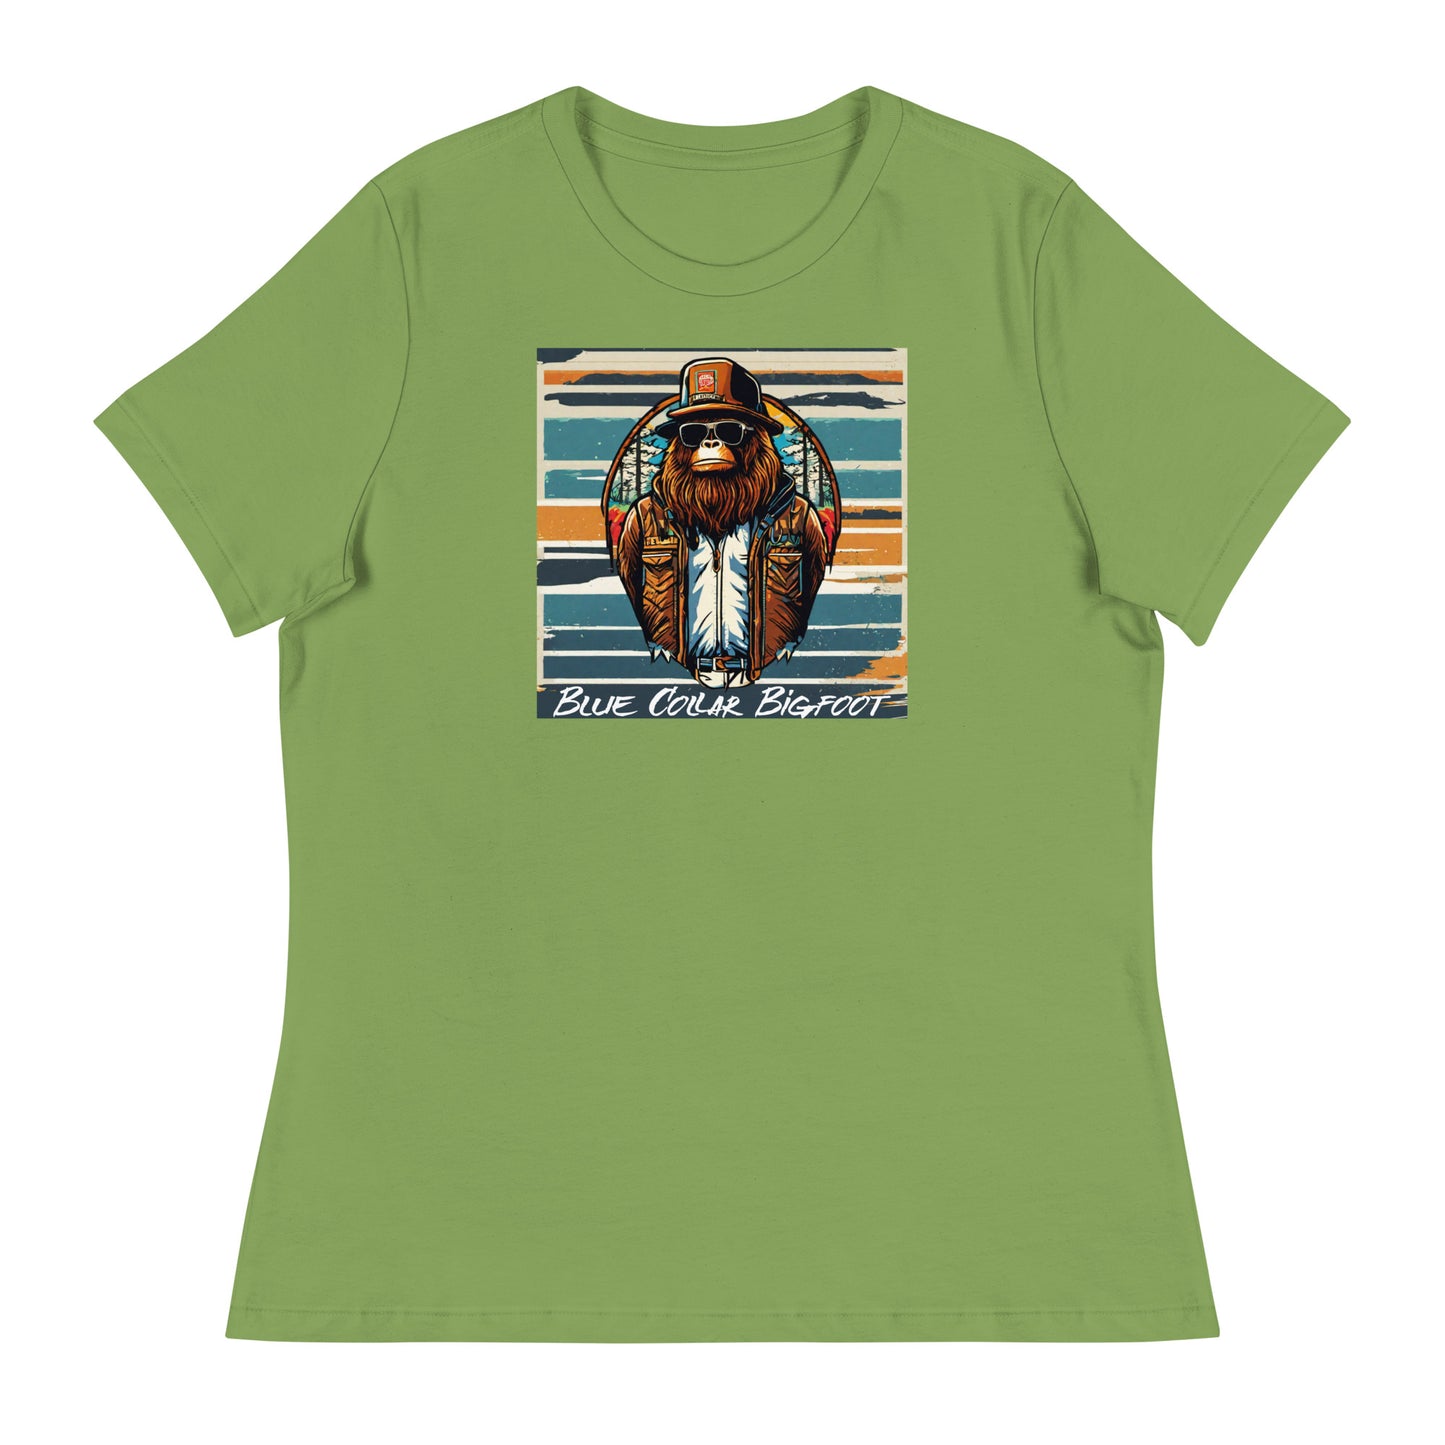 Blue-Collar Bigfoot Women's Graphic T-Shirt Leaf